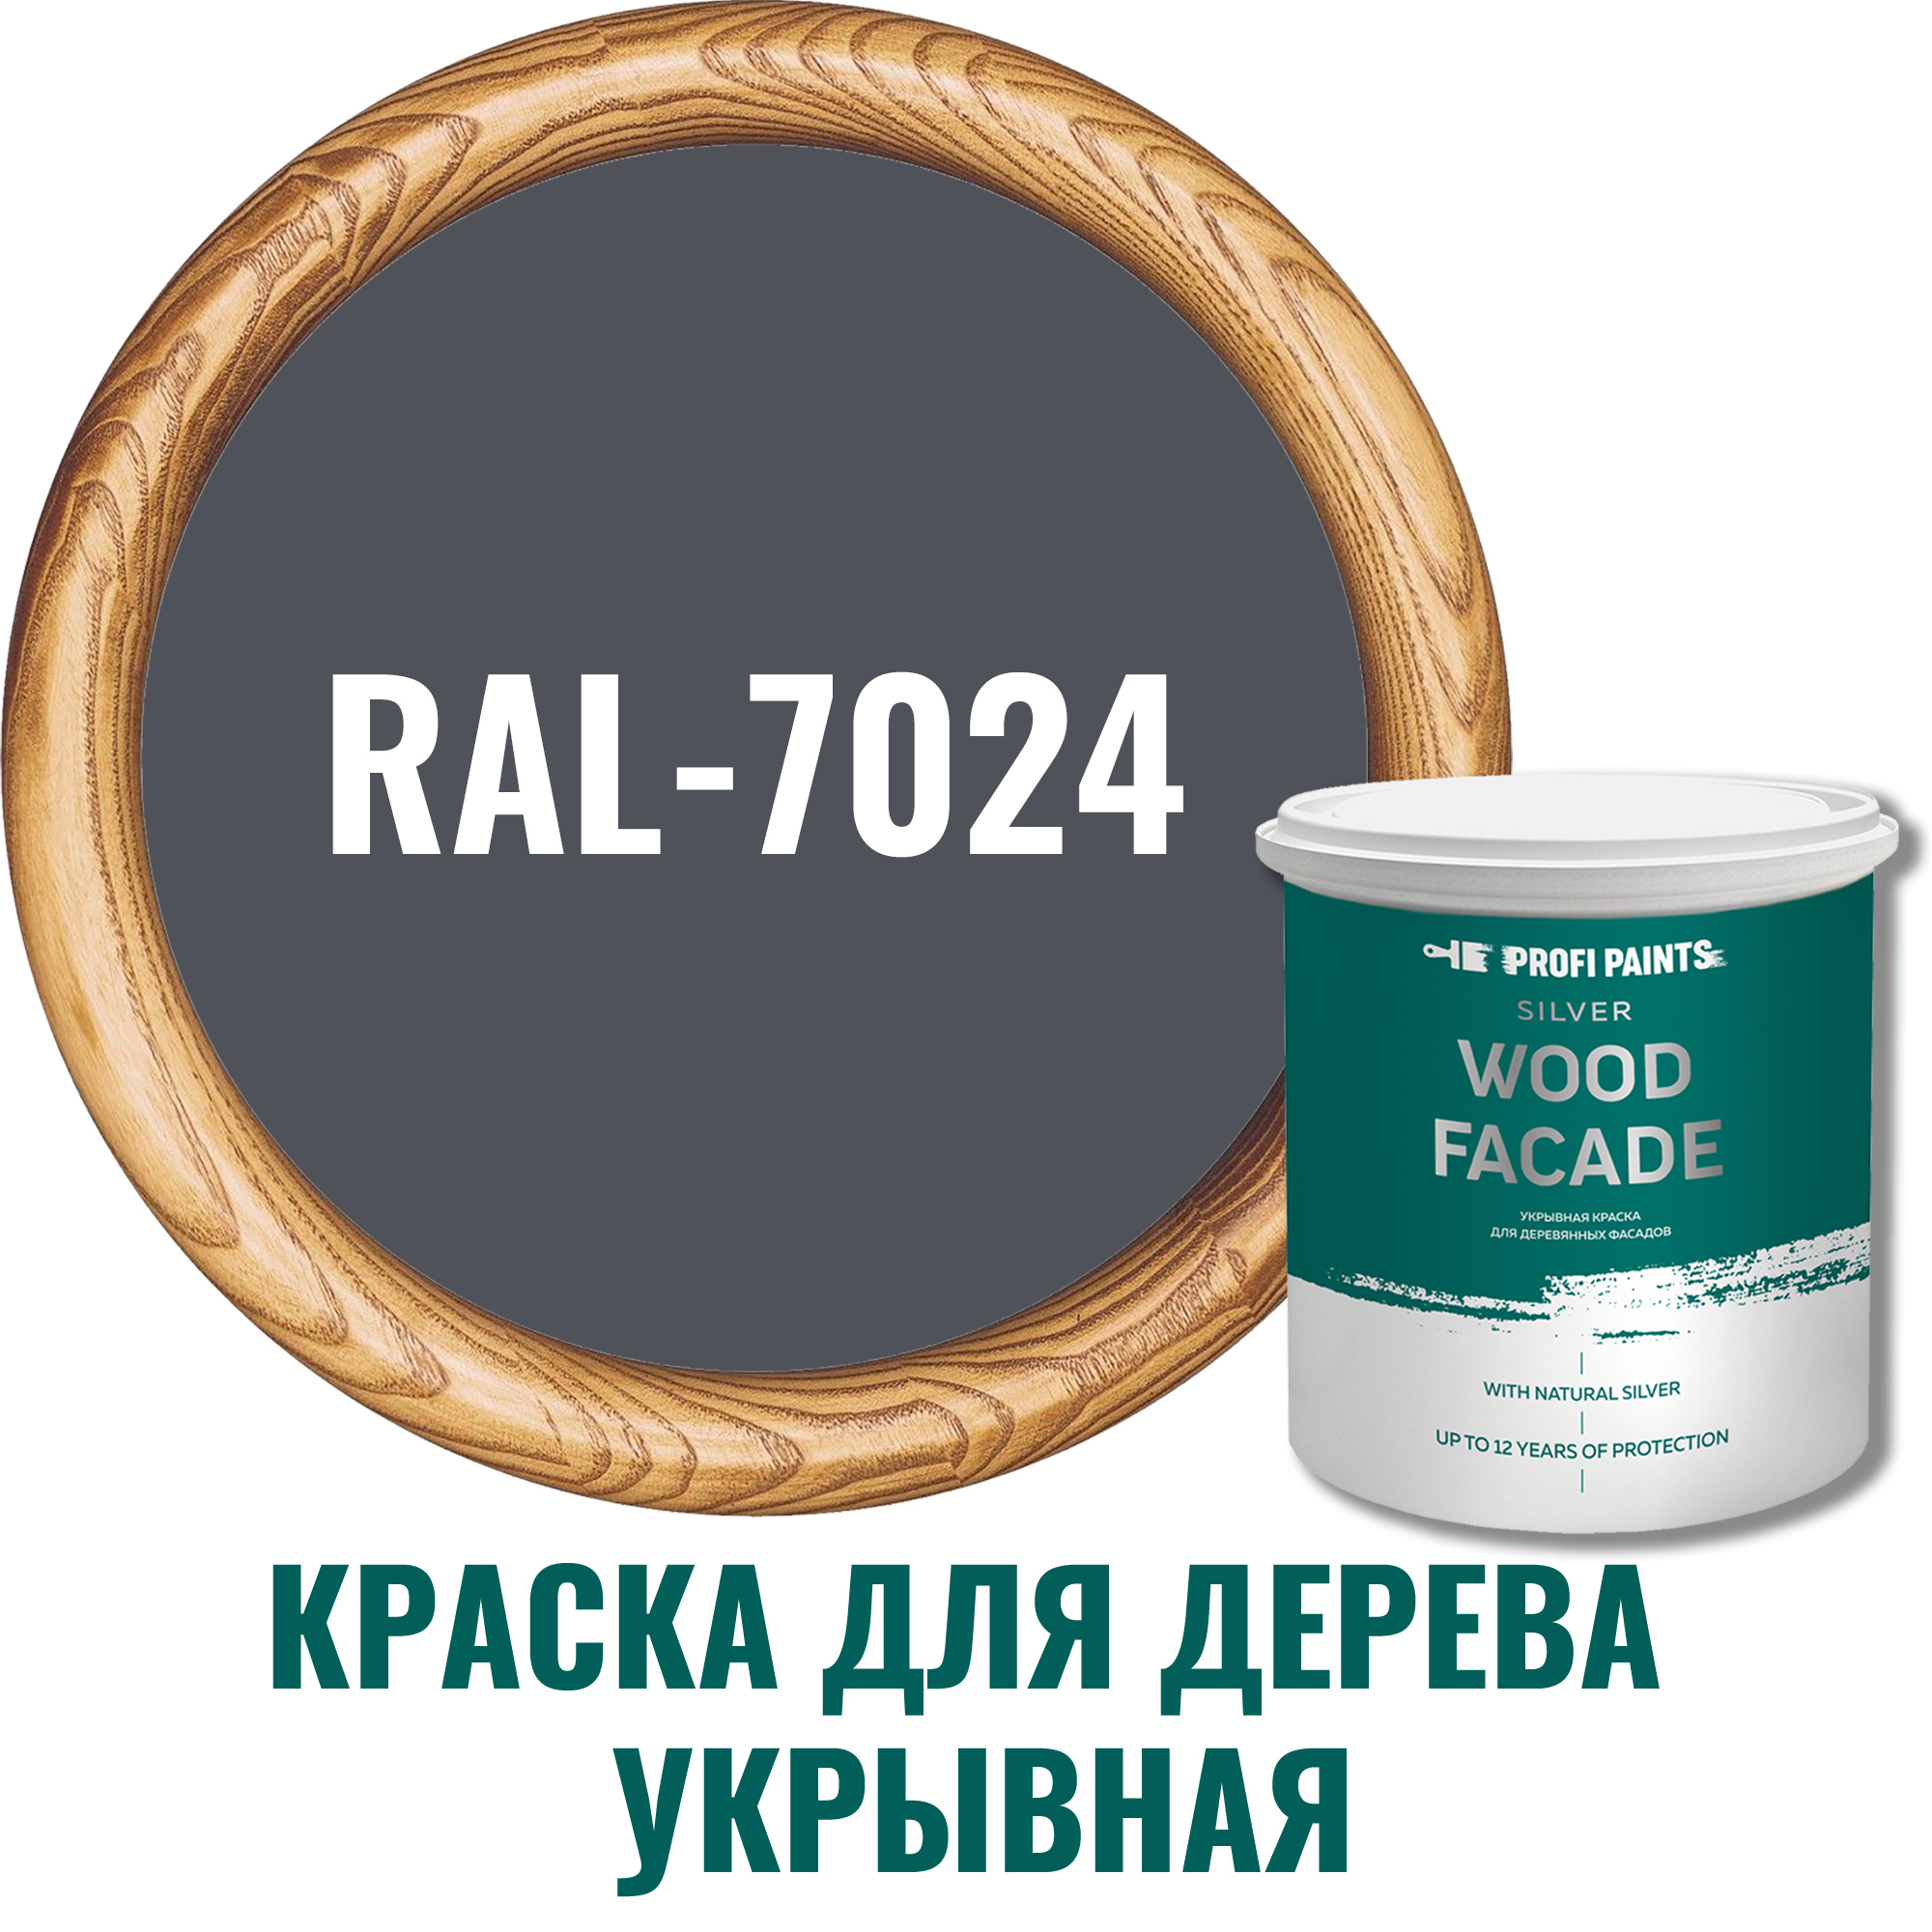 91106578 Краска для дерева 11218_D SILVER WOOD FASADE цвет RAL-7024 графитовый серый 0.9 л STLM-0487576 PROFIPAINTS